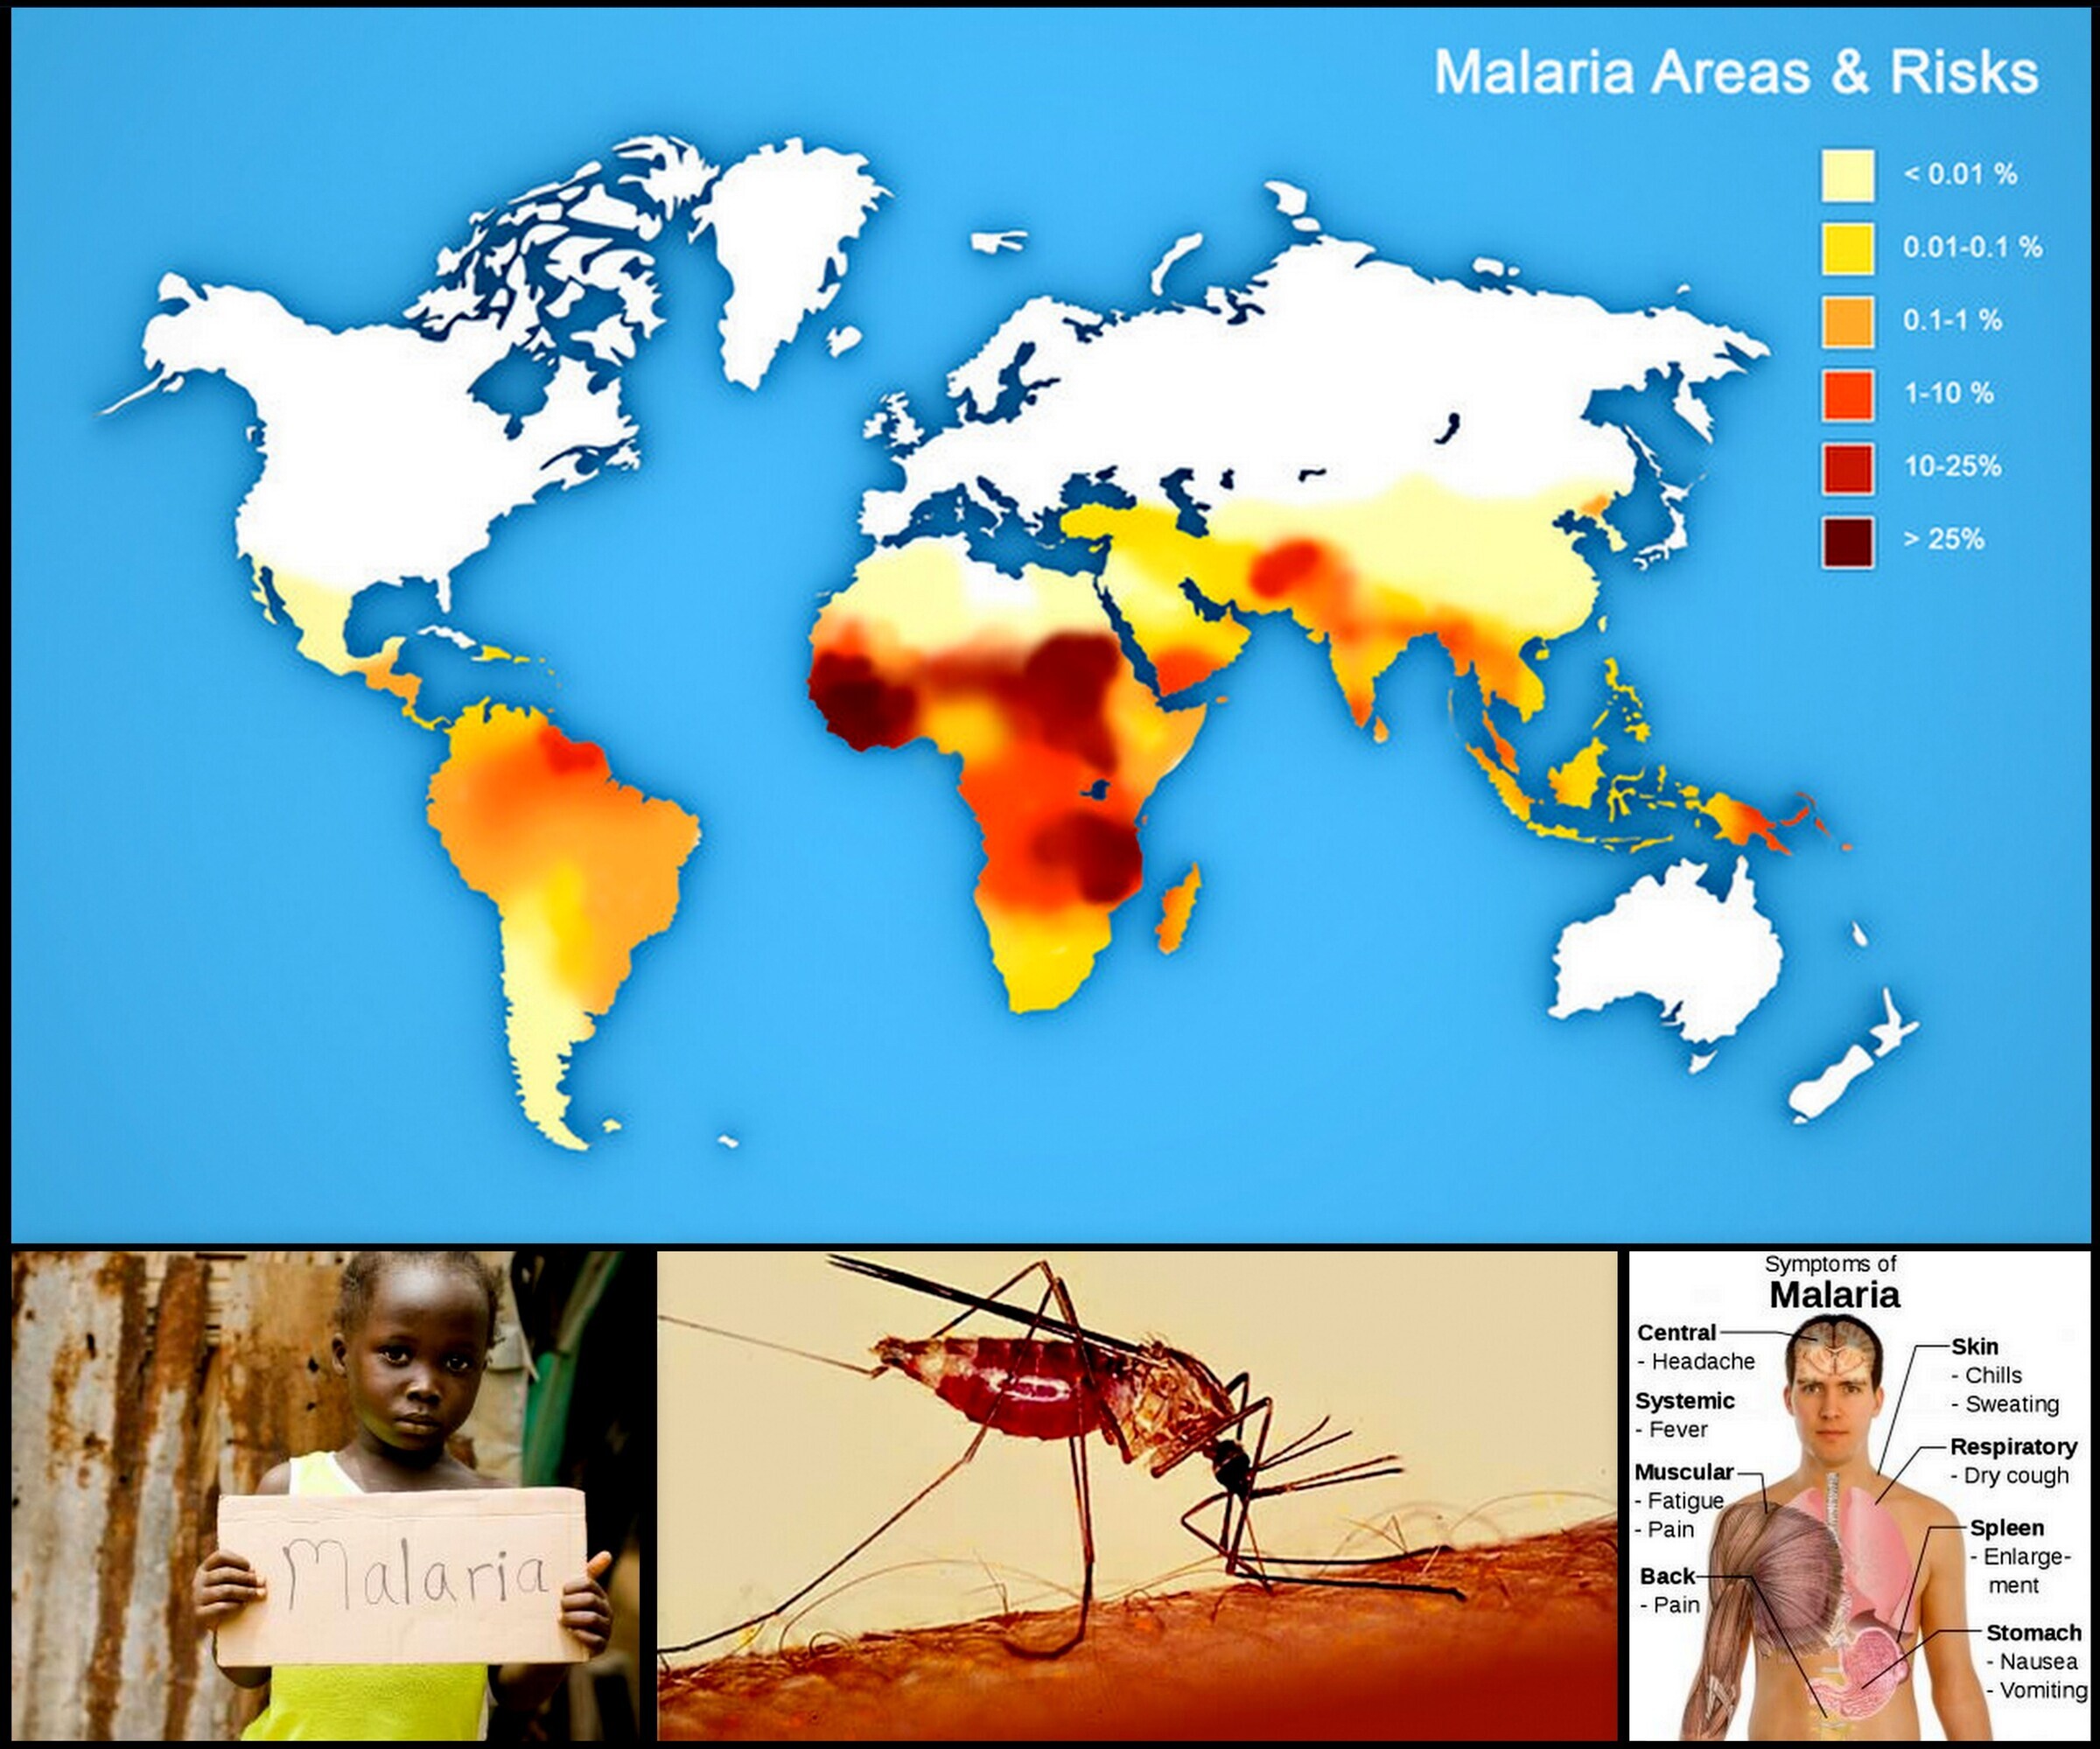 Распространение малярии